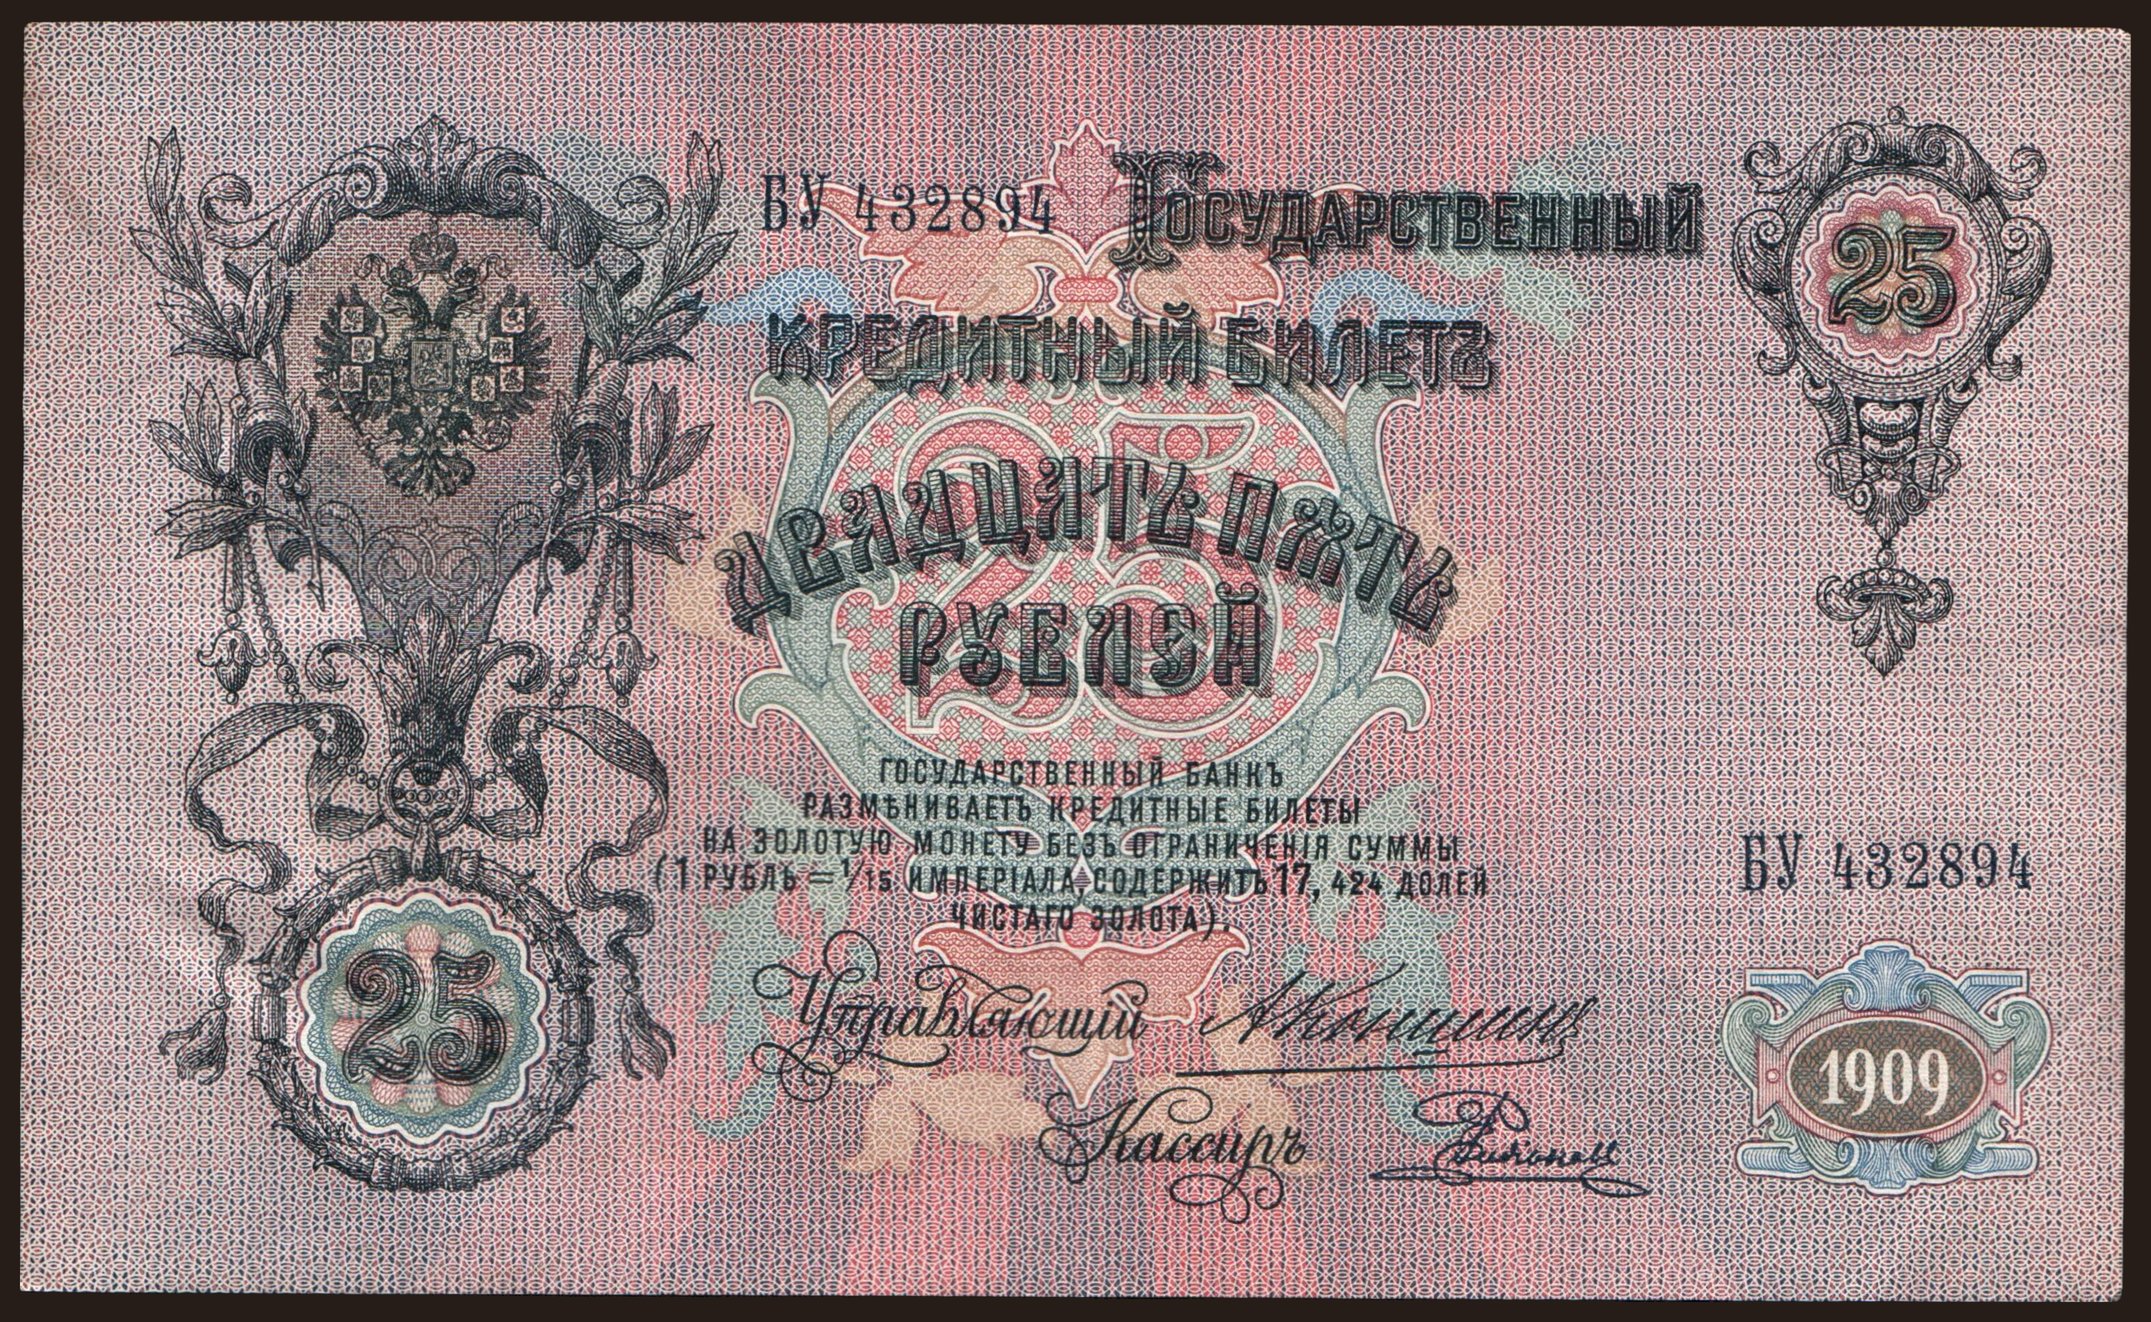 25 rubel, 1909, Konshin/ E.Rodionow